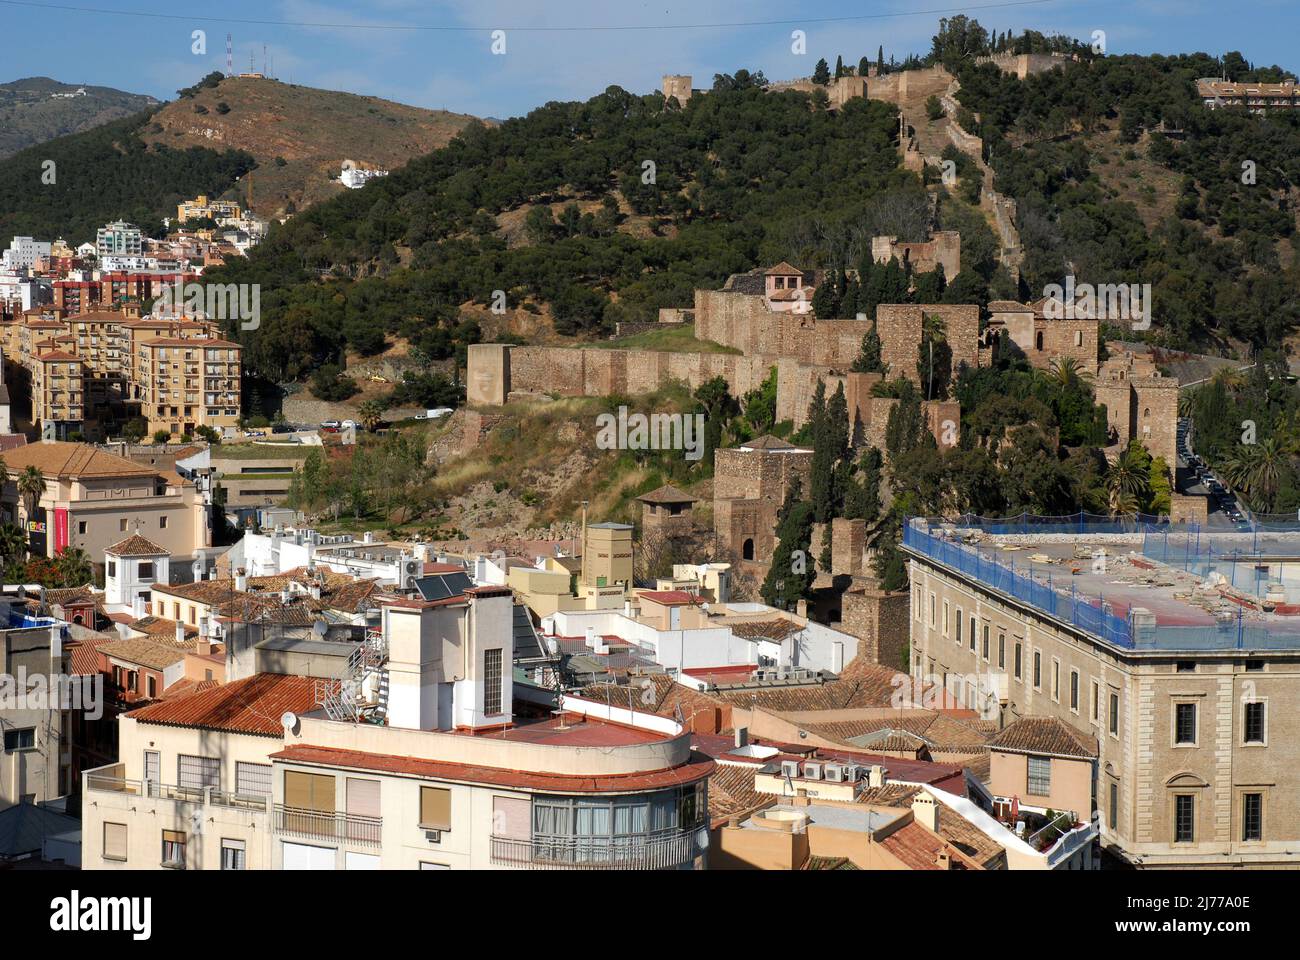 la alacazaba , Malaga foto: © Rosmi Duaso/fototext,BCN. Stockfoto